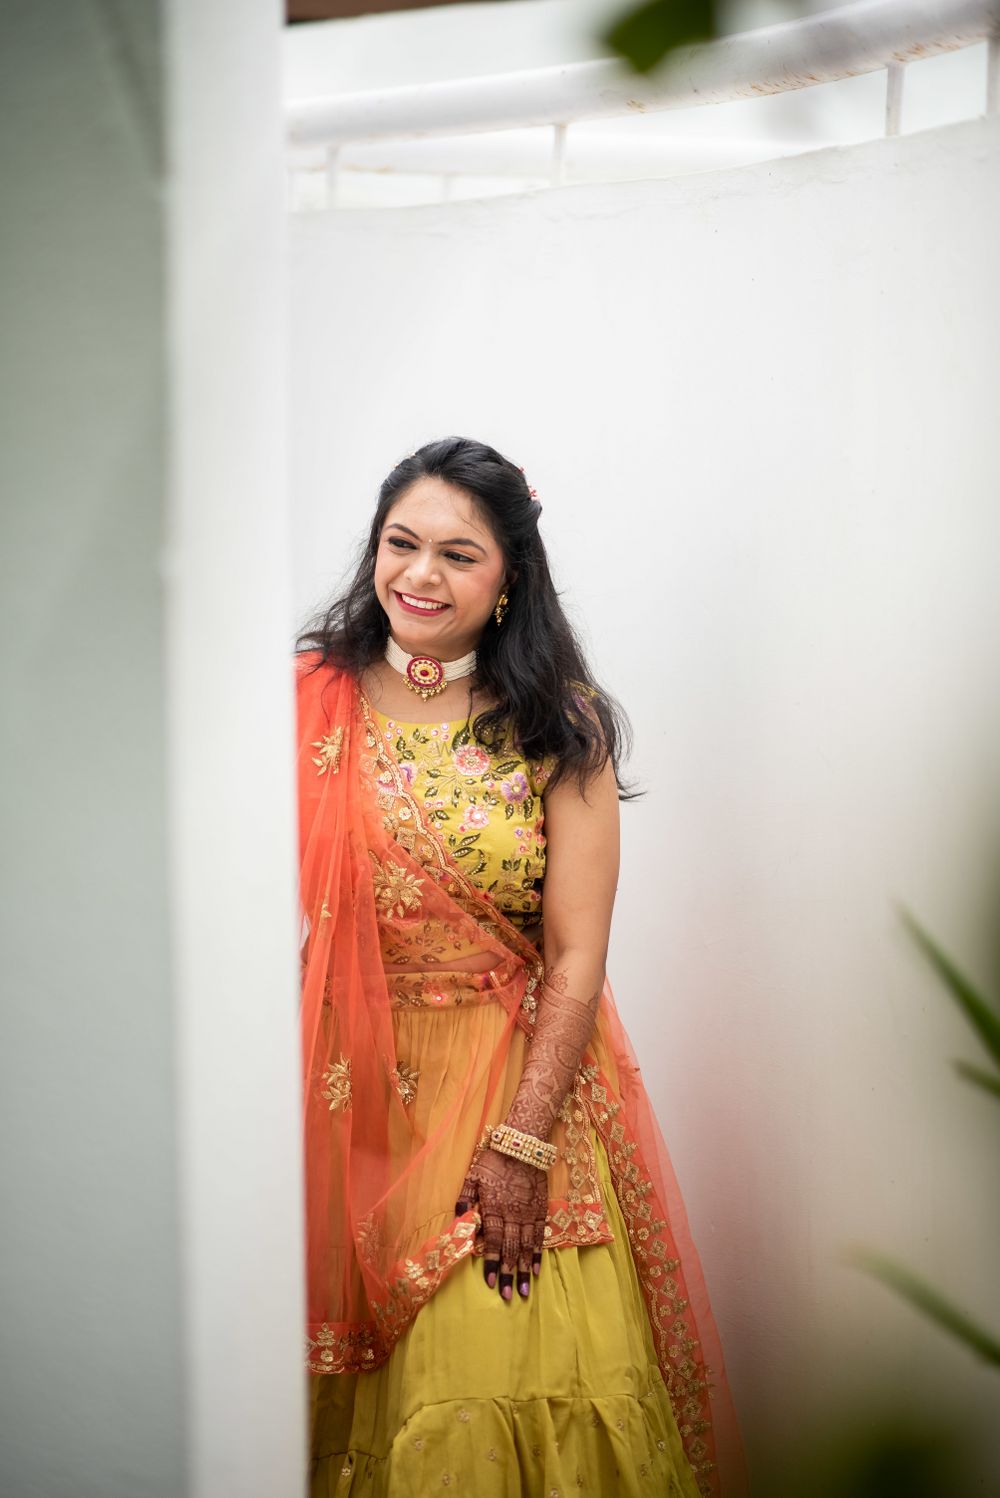 Photo From Maitree weds Karan - By Roma Patel